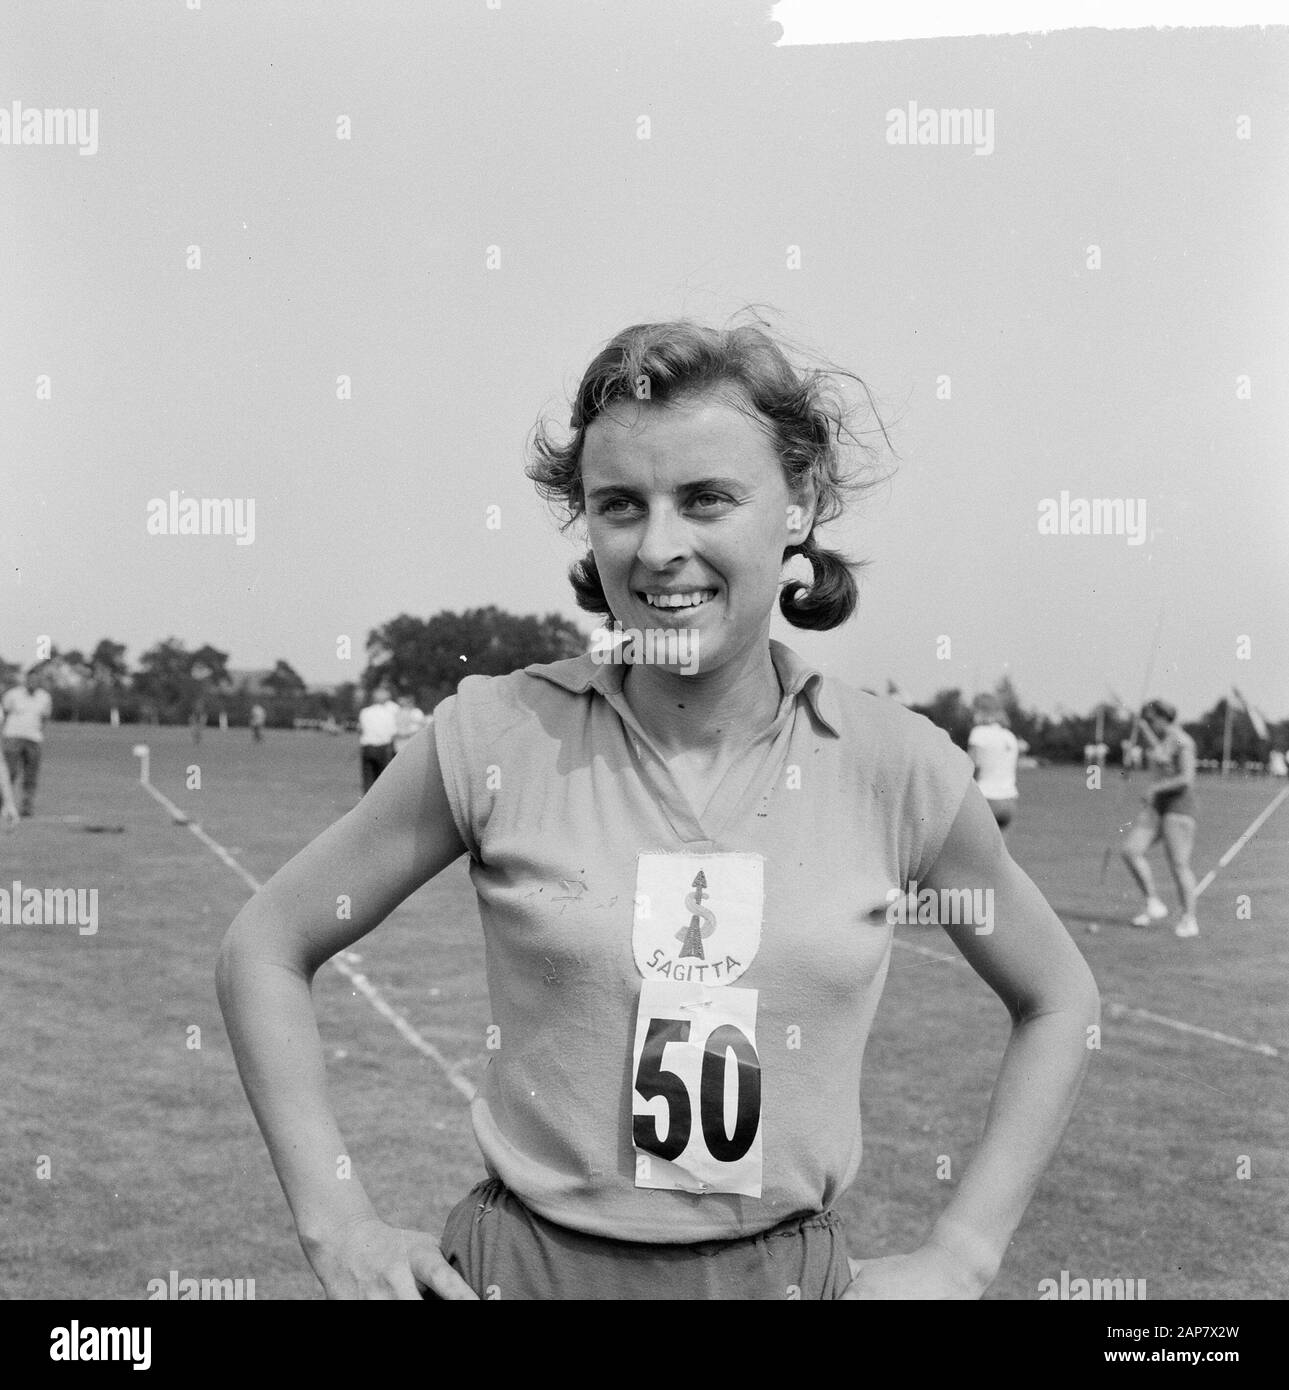 Frauen Doppel-Meisterschaften Leichtathletik in Apeldoorn, Tilly van der Sword (800 Meter) Datum: 26. Juli 1964 Ort: Apeldoorn, Gelderland Schlagwörter: Leichtathletik, Porträts, Sportname: Schwert Tilly van der Stockfoto